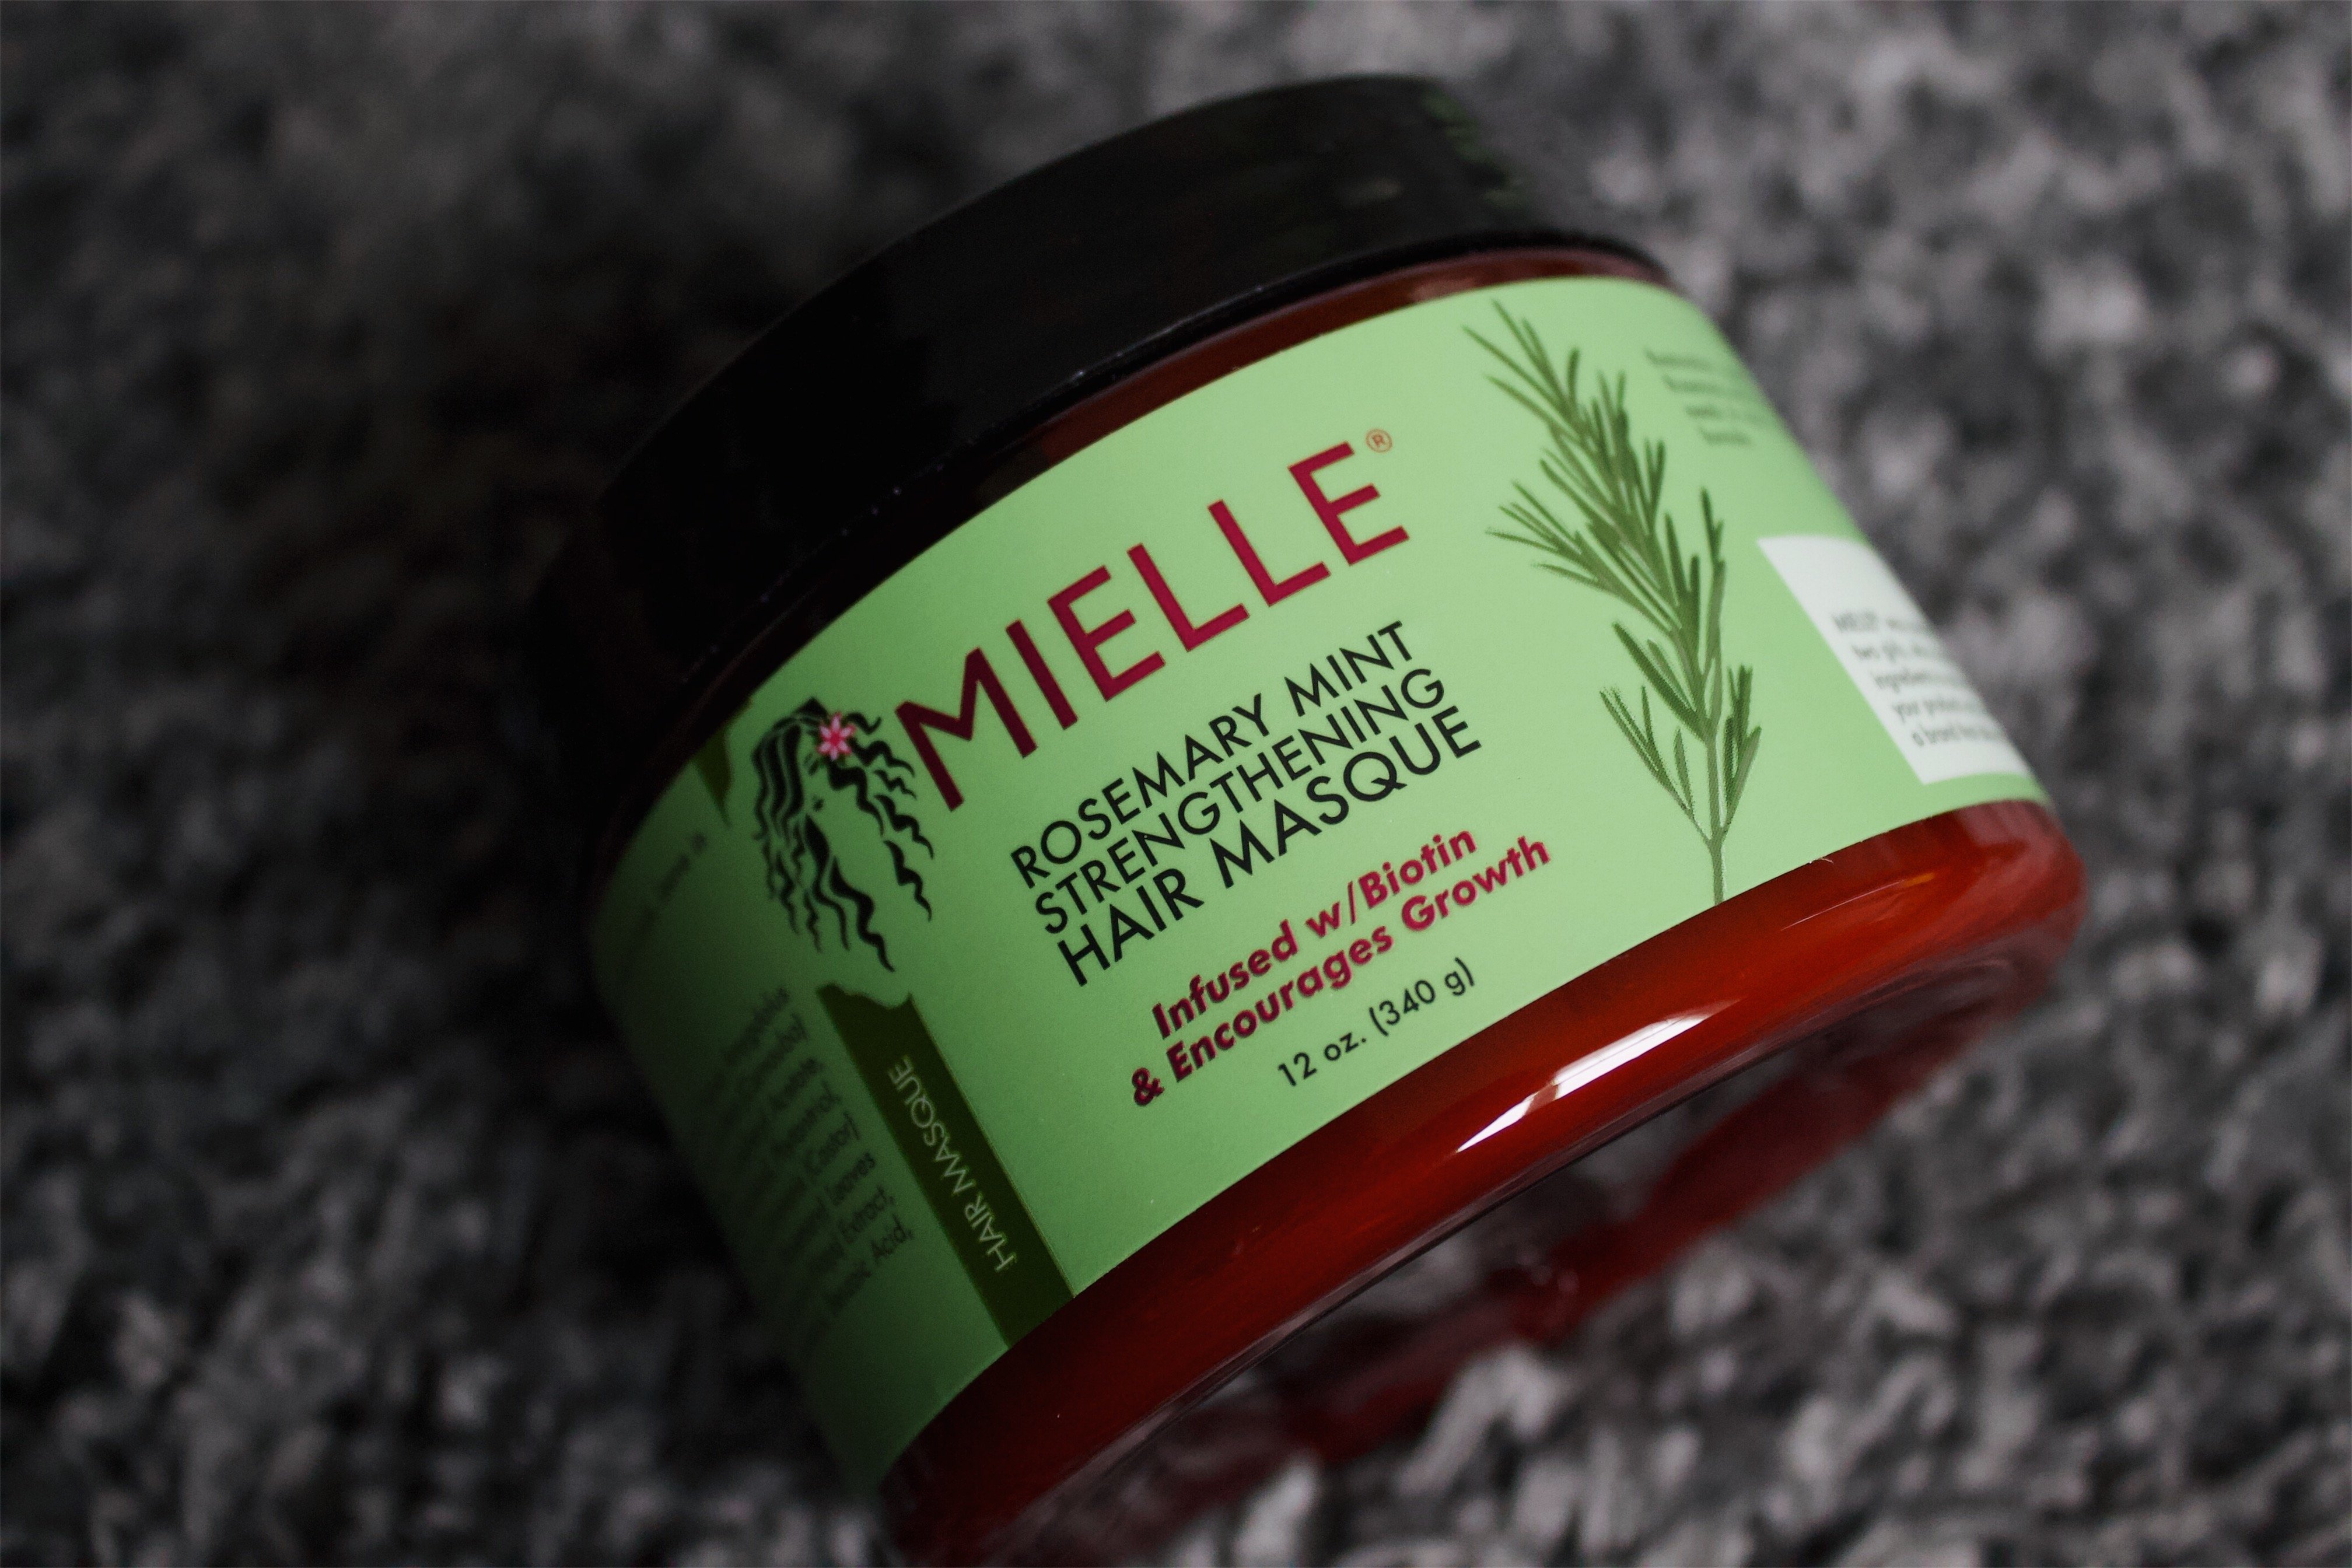 Mielle Organics Rosemary Mint Strengthening Hair Masque, 12 Oz